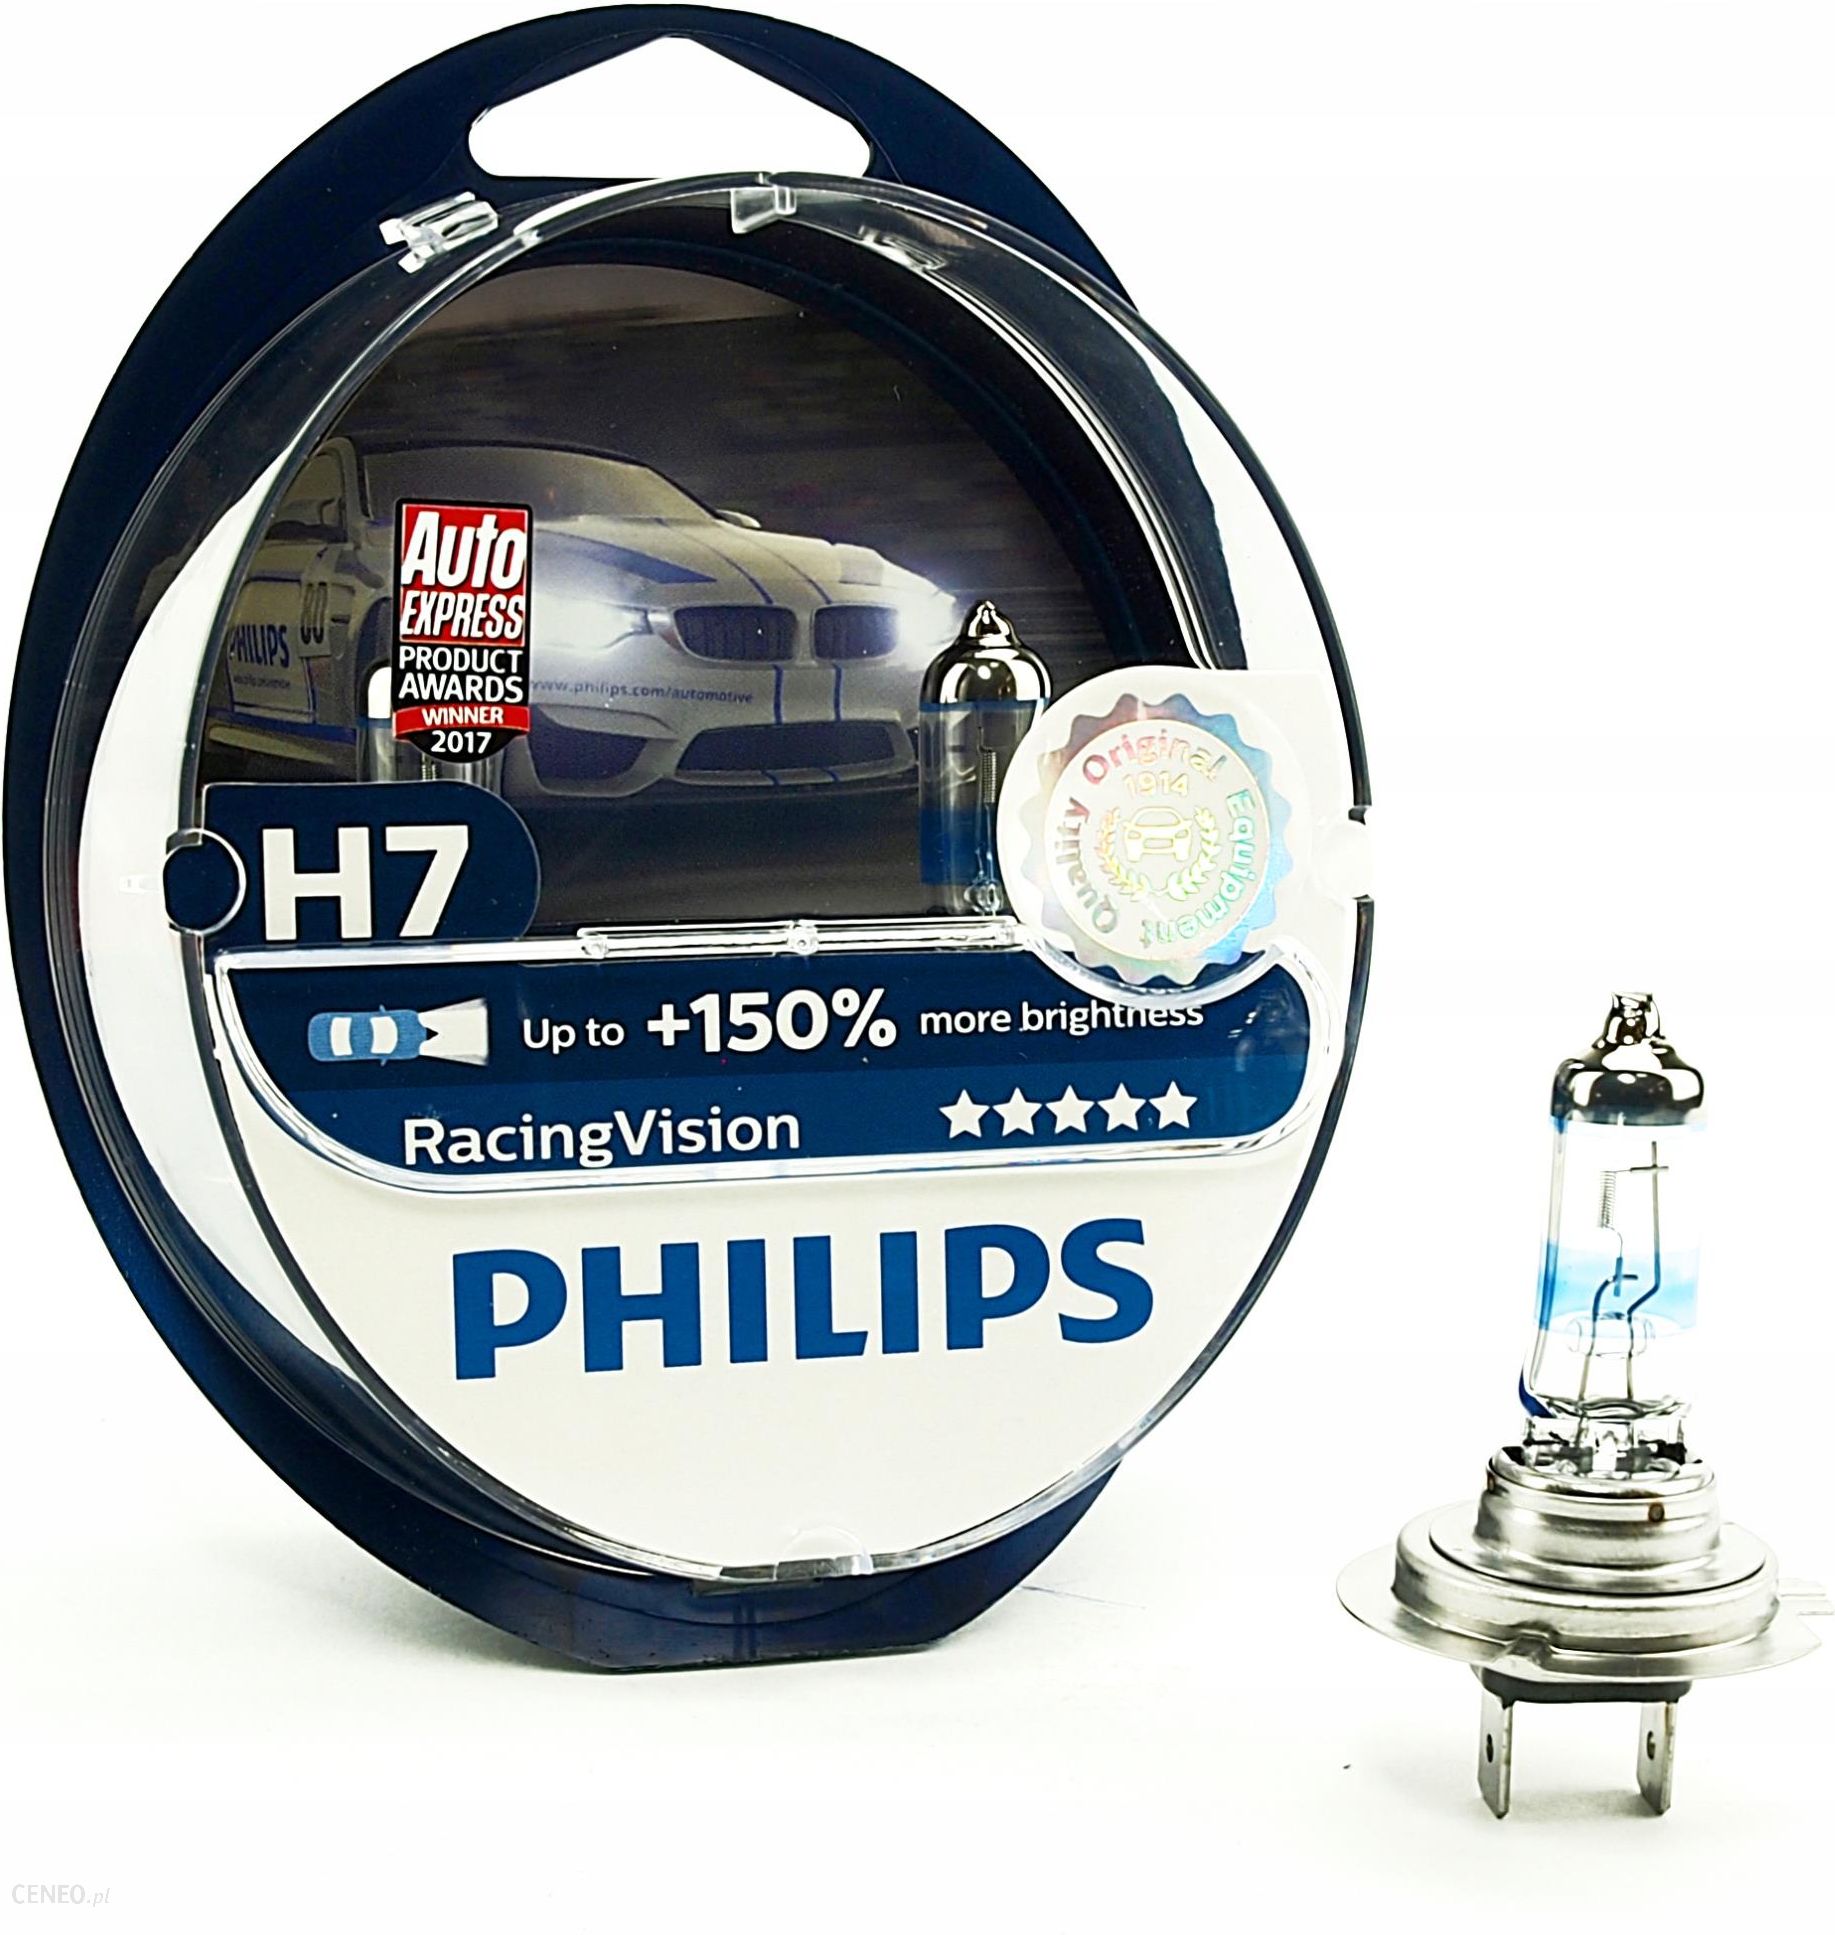 Филипс 150. H7 Philips RACINGVISION +150. Лампы Филипс h7 рейсинг Вижн 150. Philips лампы h7 +150. Лампа Philips Racing Vision h7.